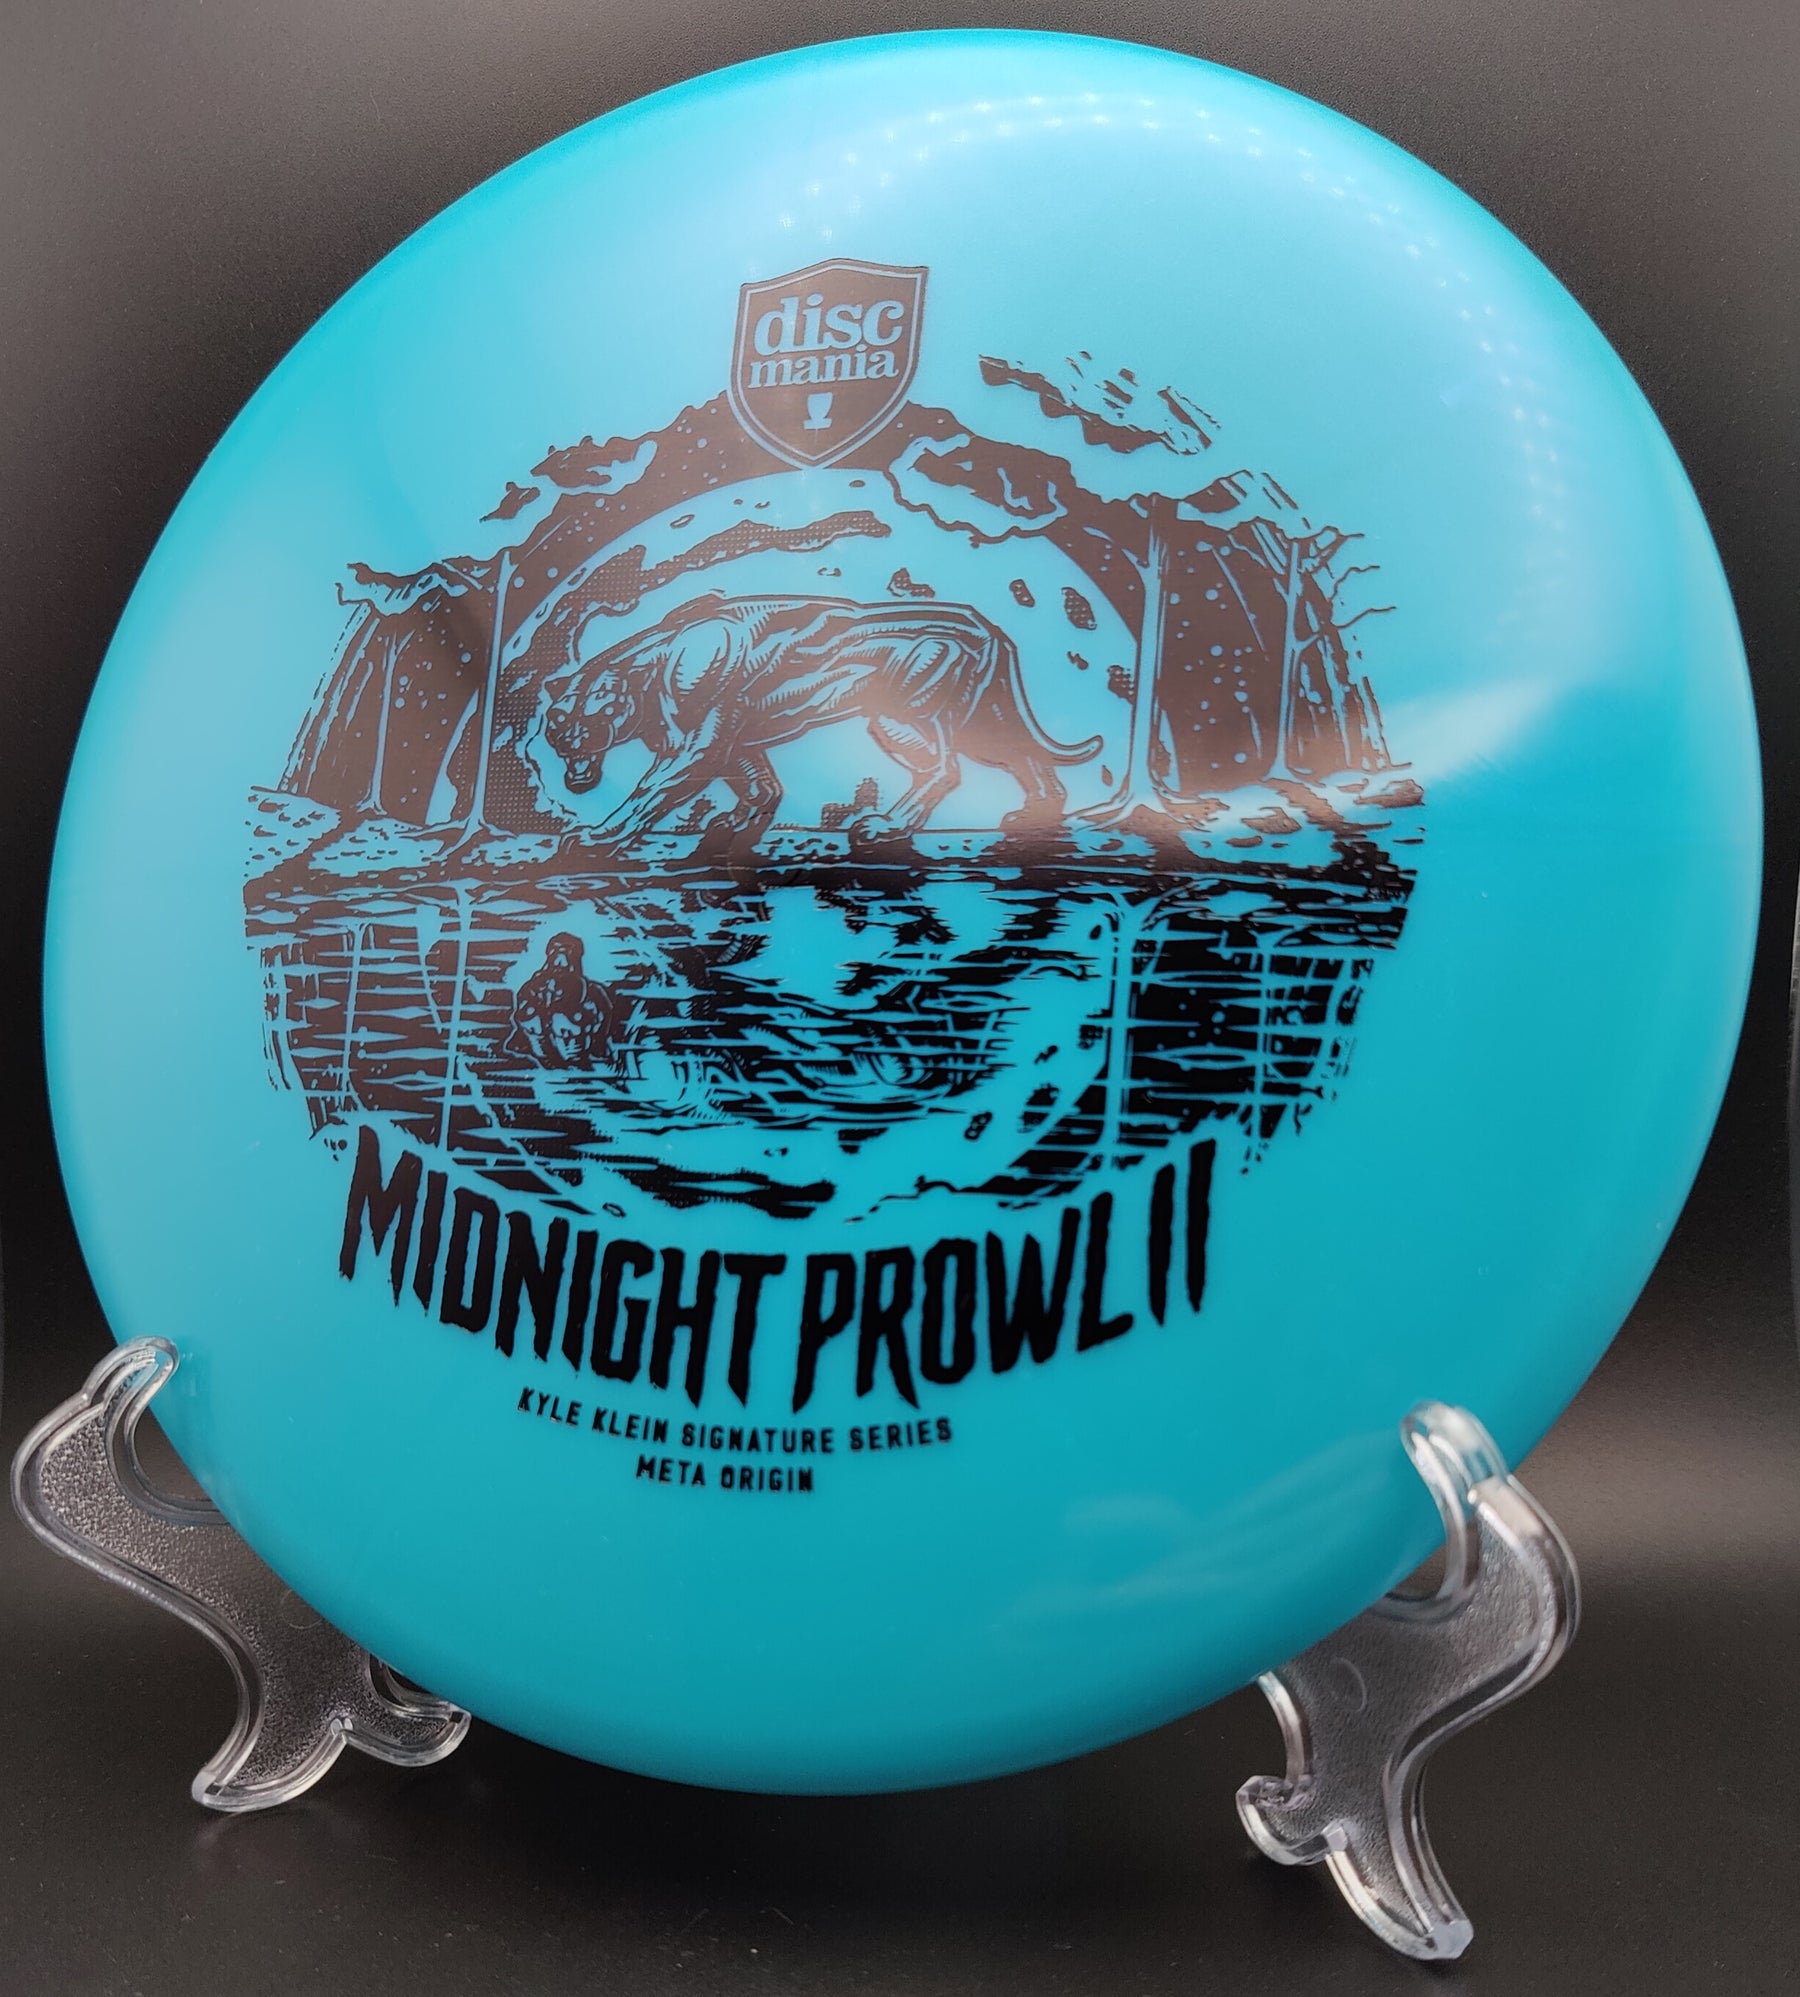 Discmania Midnight Prowl 2 - Meta Origin Kyle Klein Signature Series